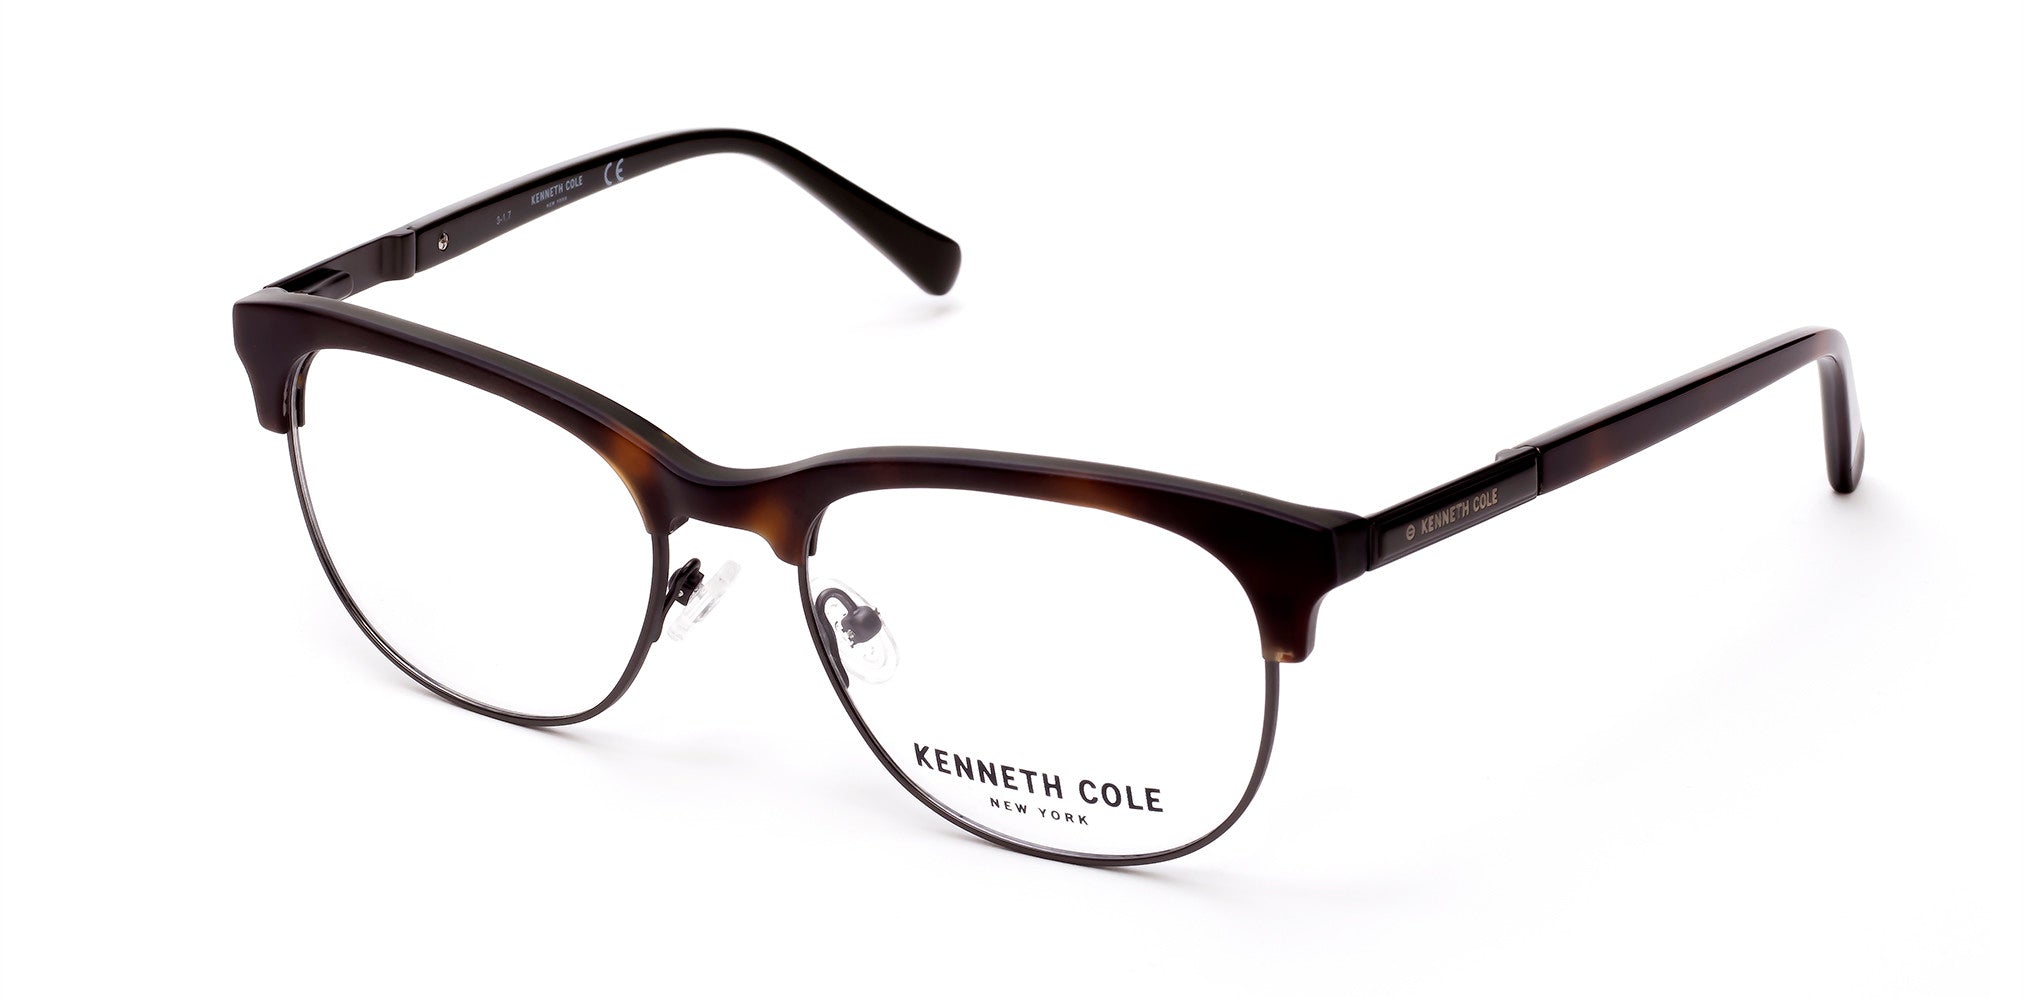 Kenneth Cole New York,Kenneth Cole Reaction KC0266 Eyeglasses 056-056 - Havana/other